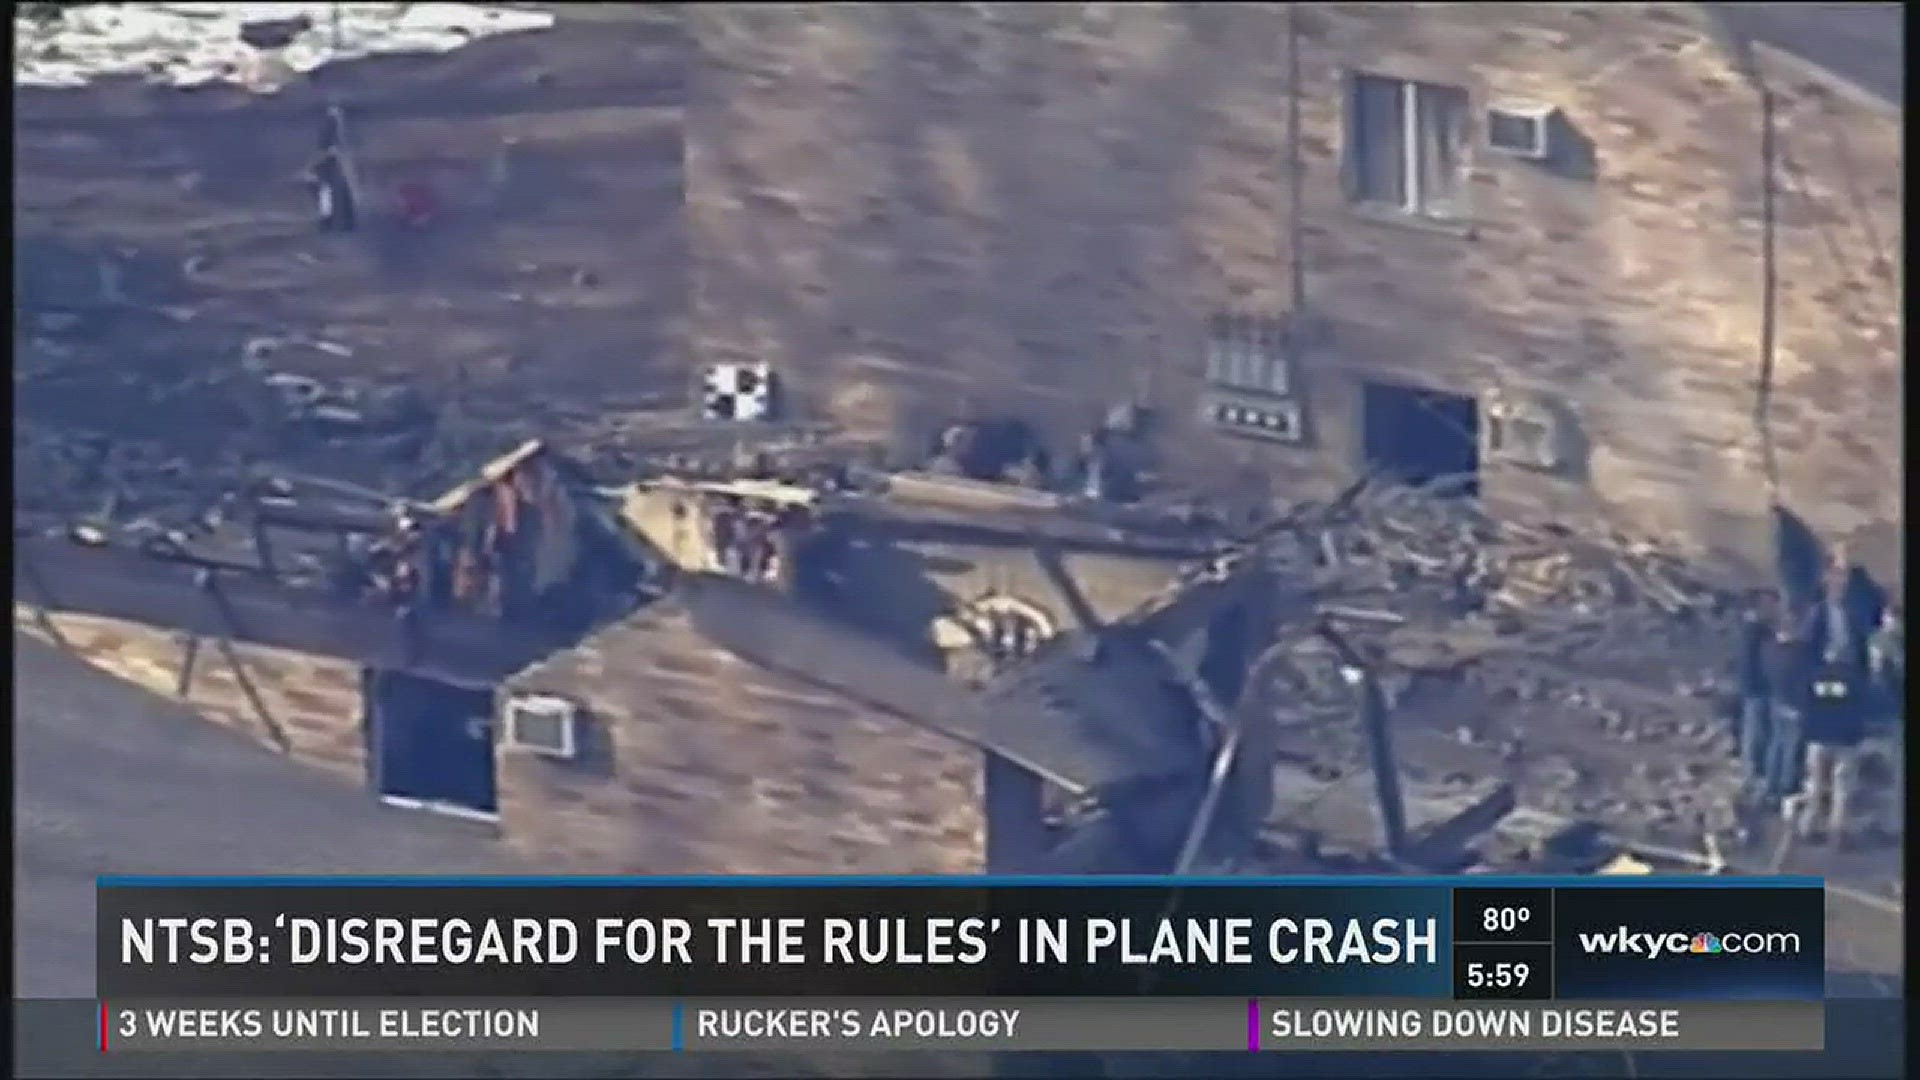 NTSB: disregard for rules in plane crash